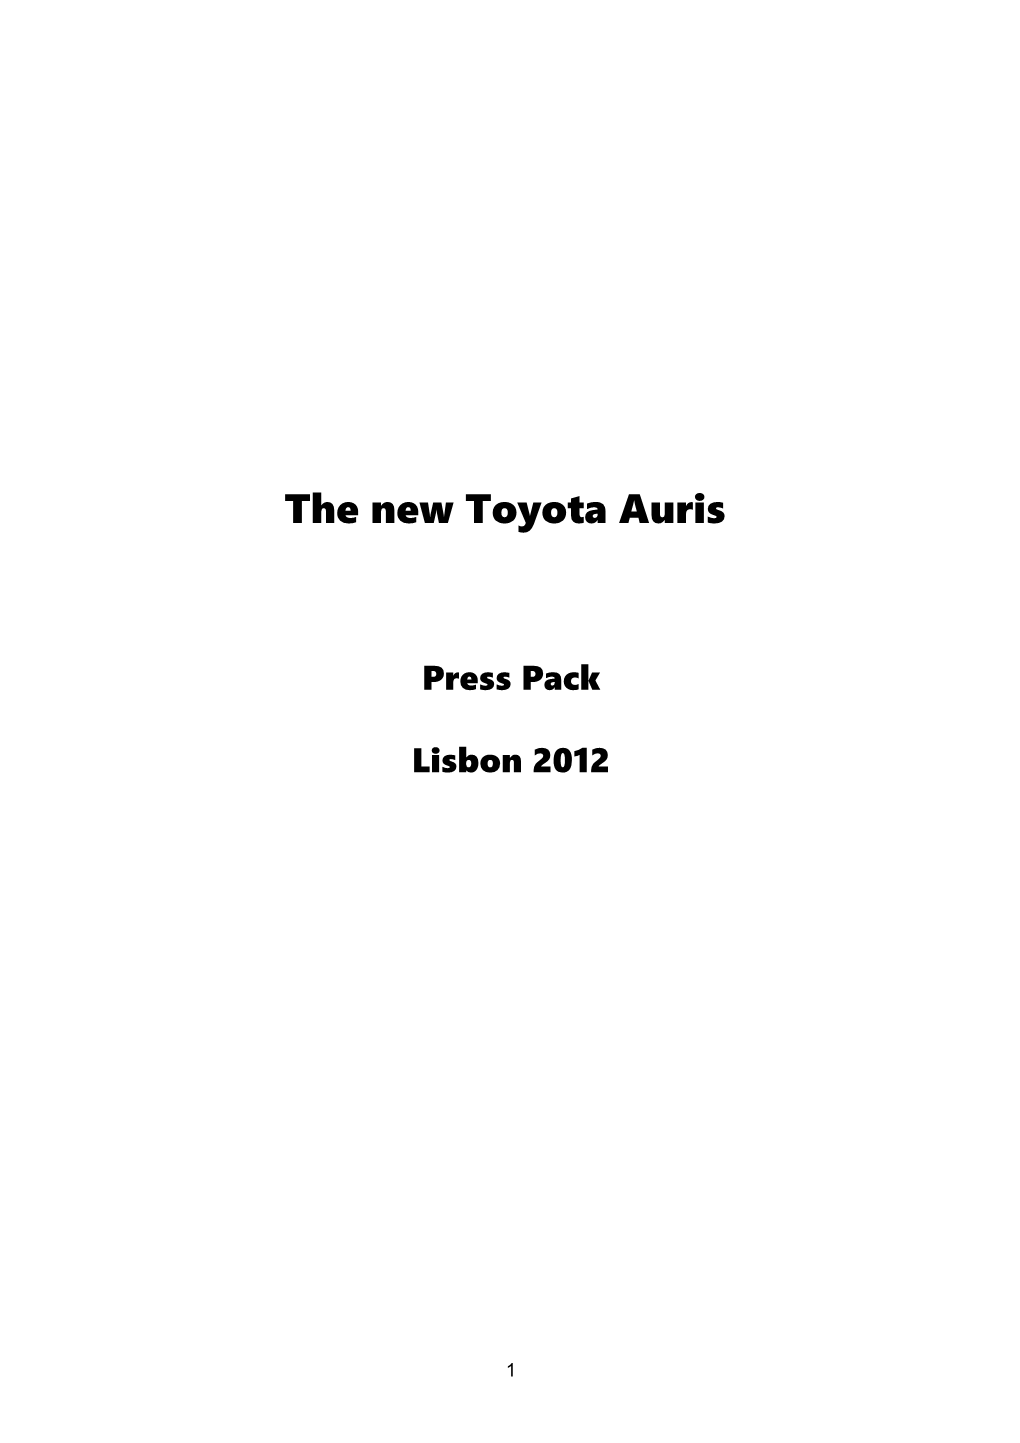 The New Toyota Auris